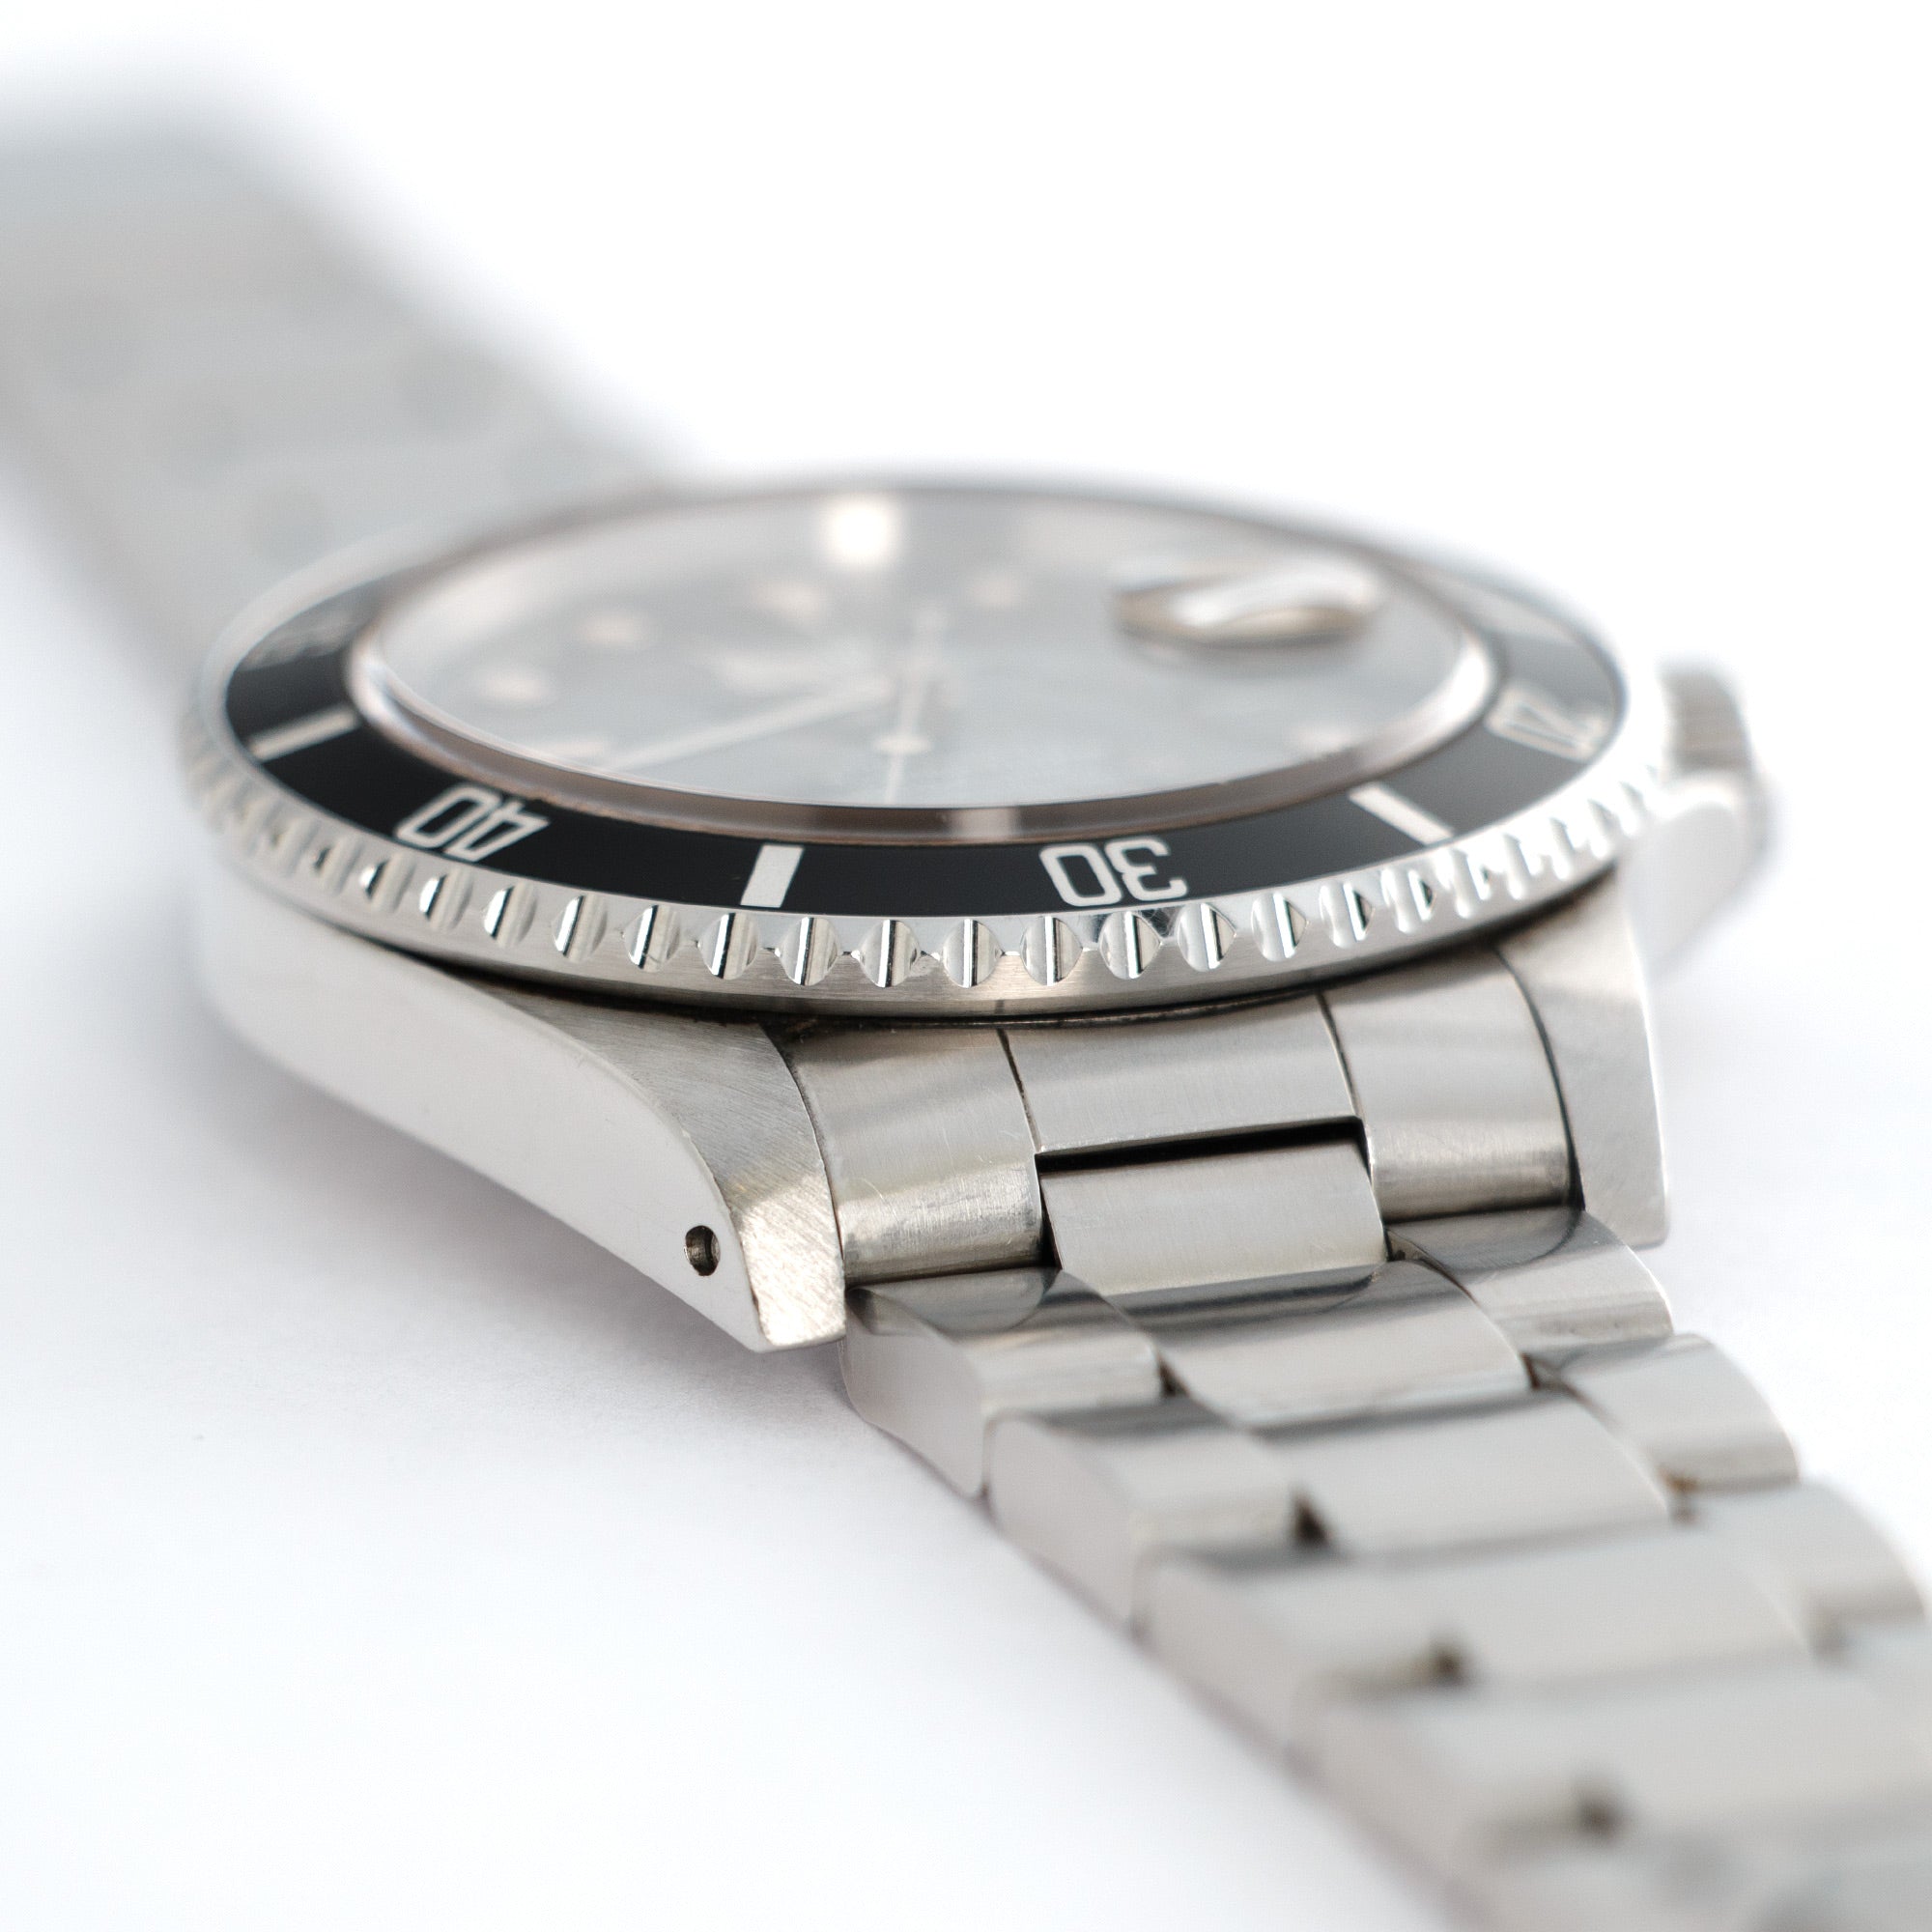 Rolex Tiffany Submariner Watch Ref. 16800, with Tiffany &amp; Co Warranty